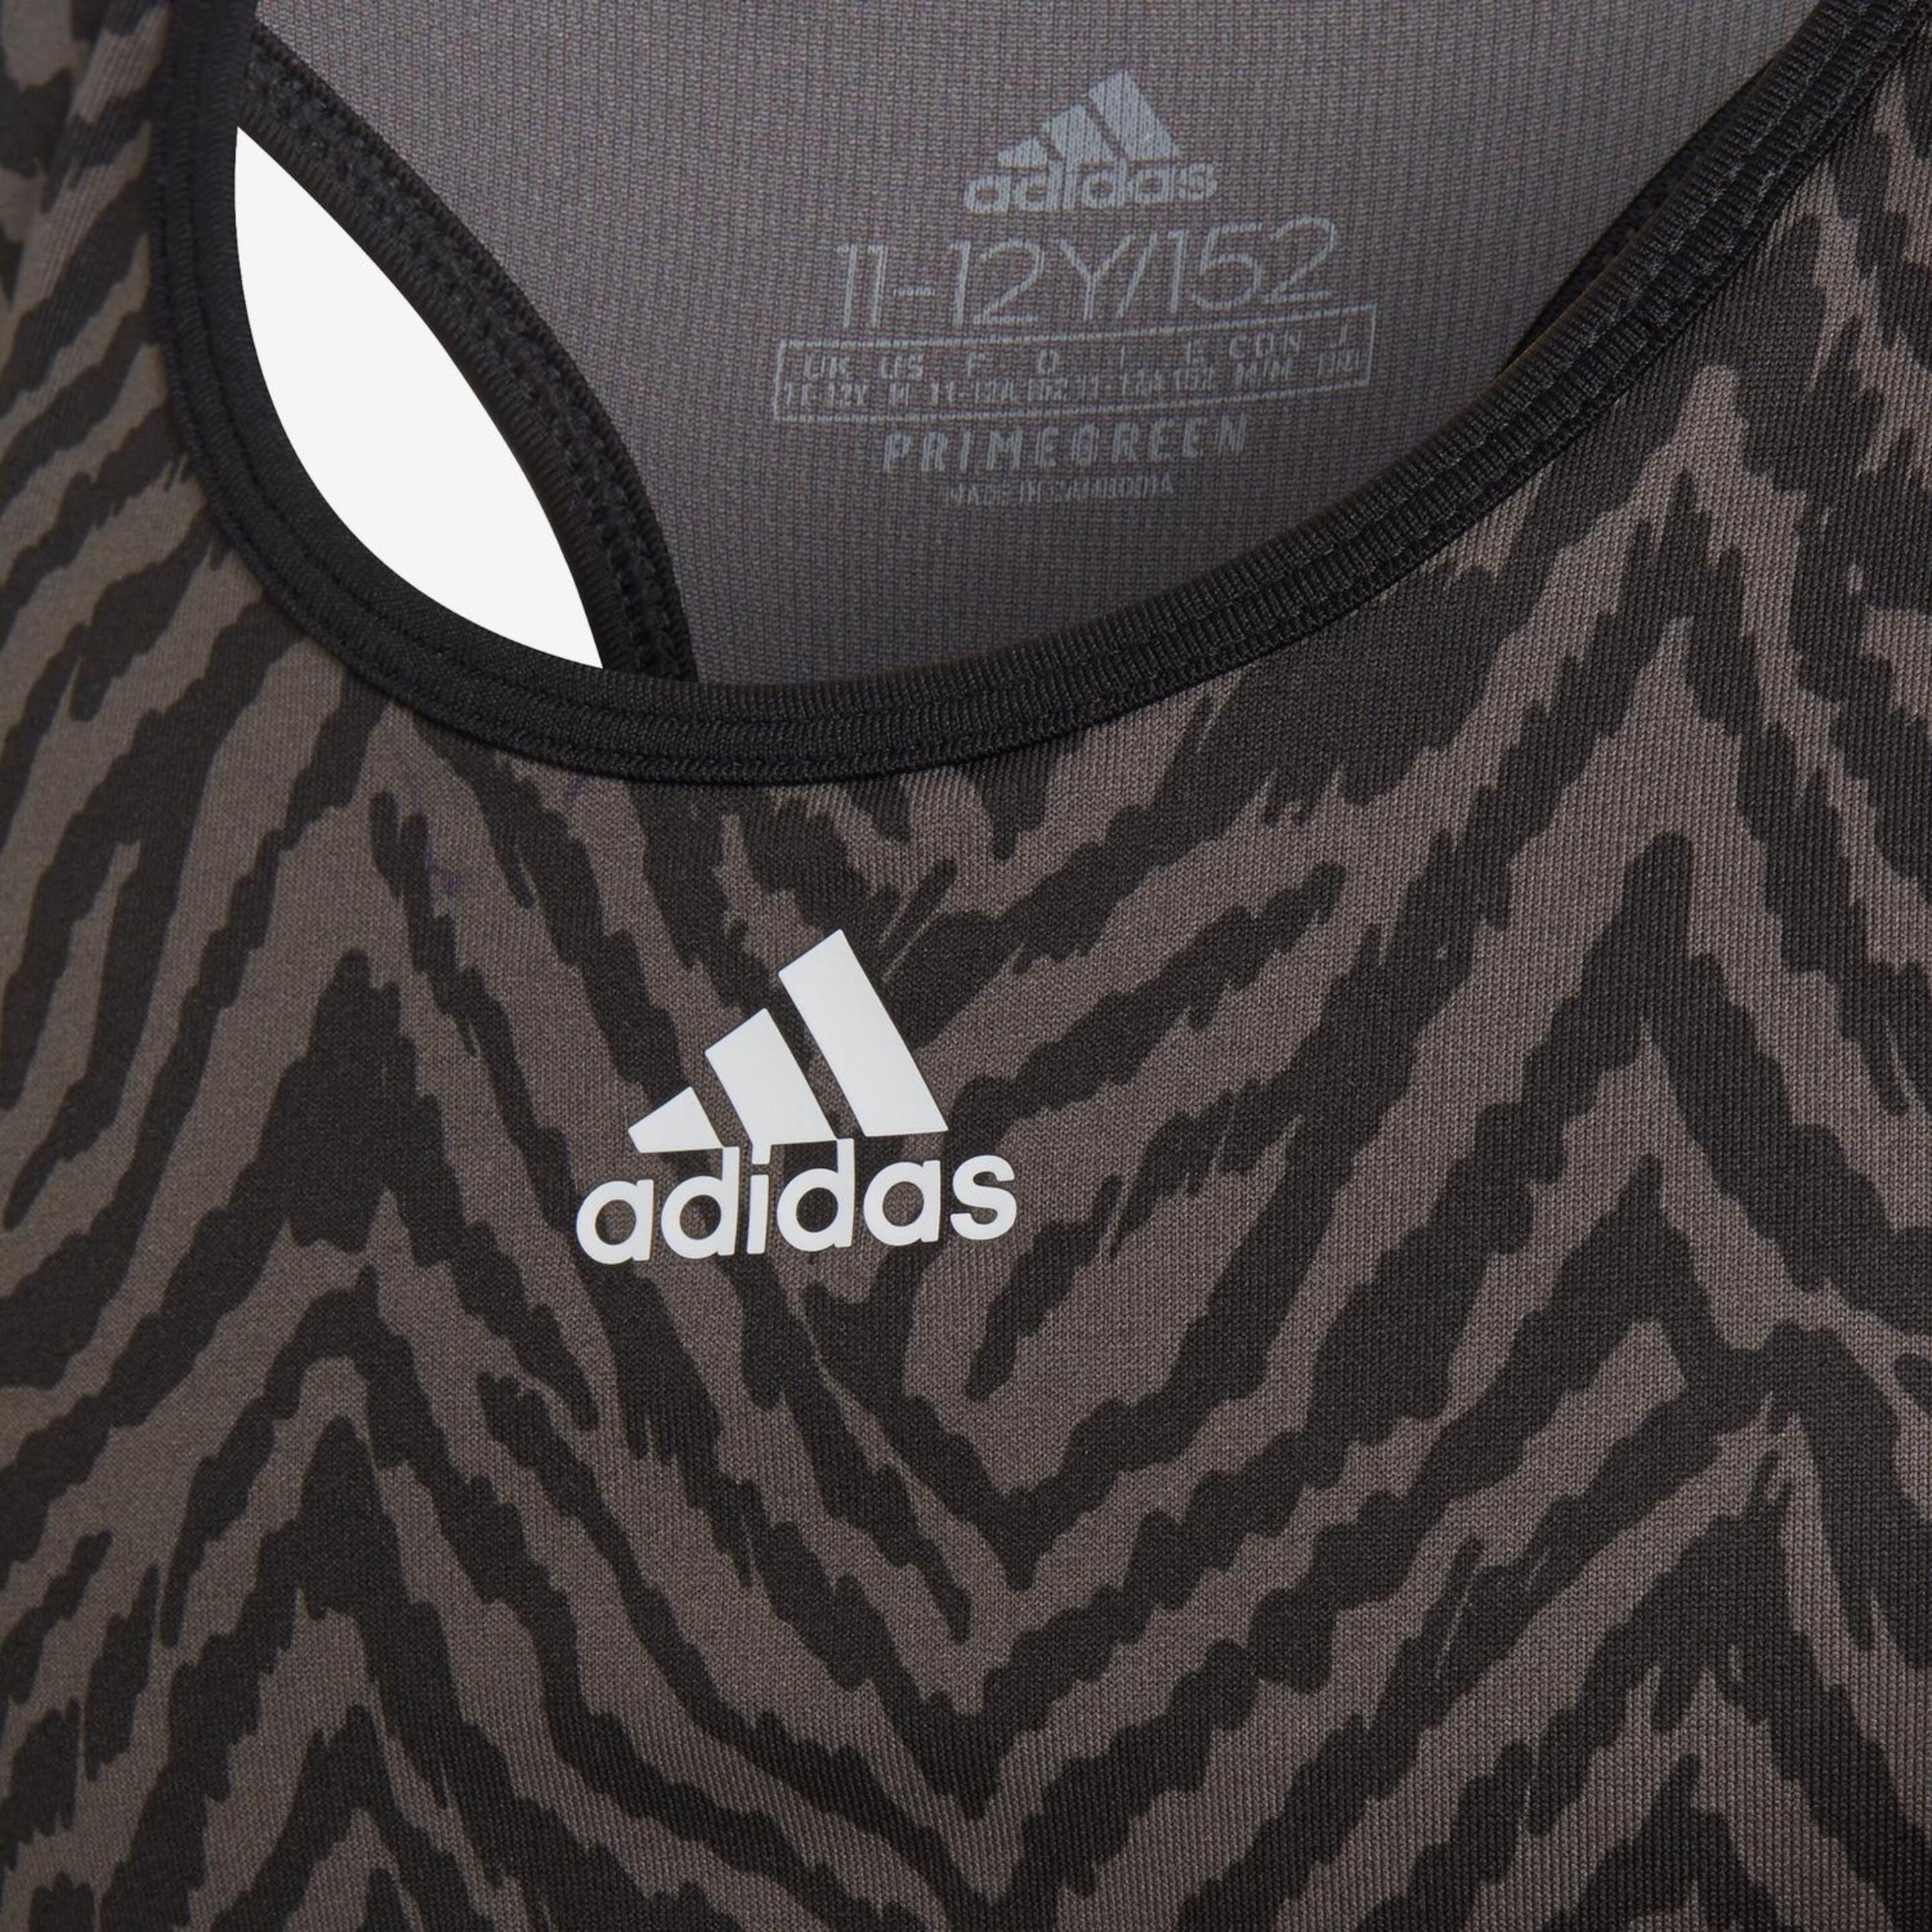 Soutien Desporto adidas Sea Zebra